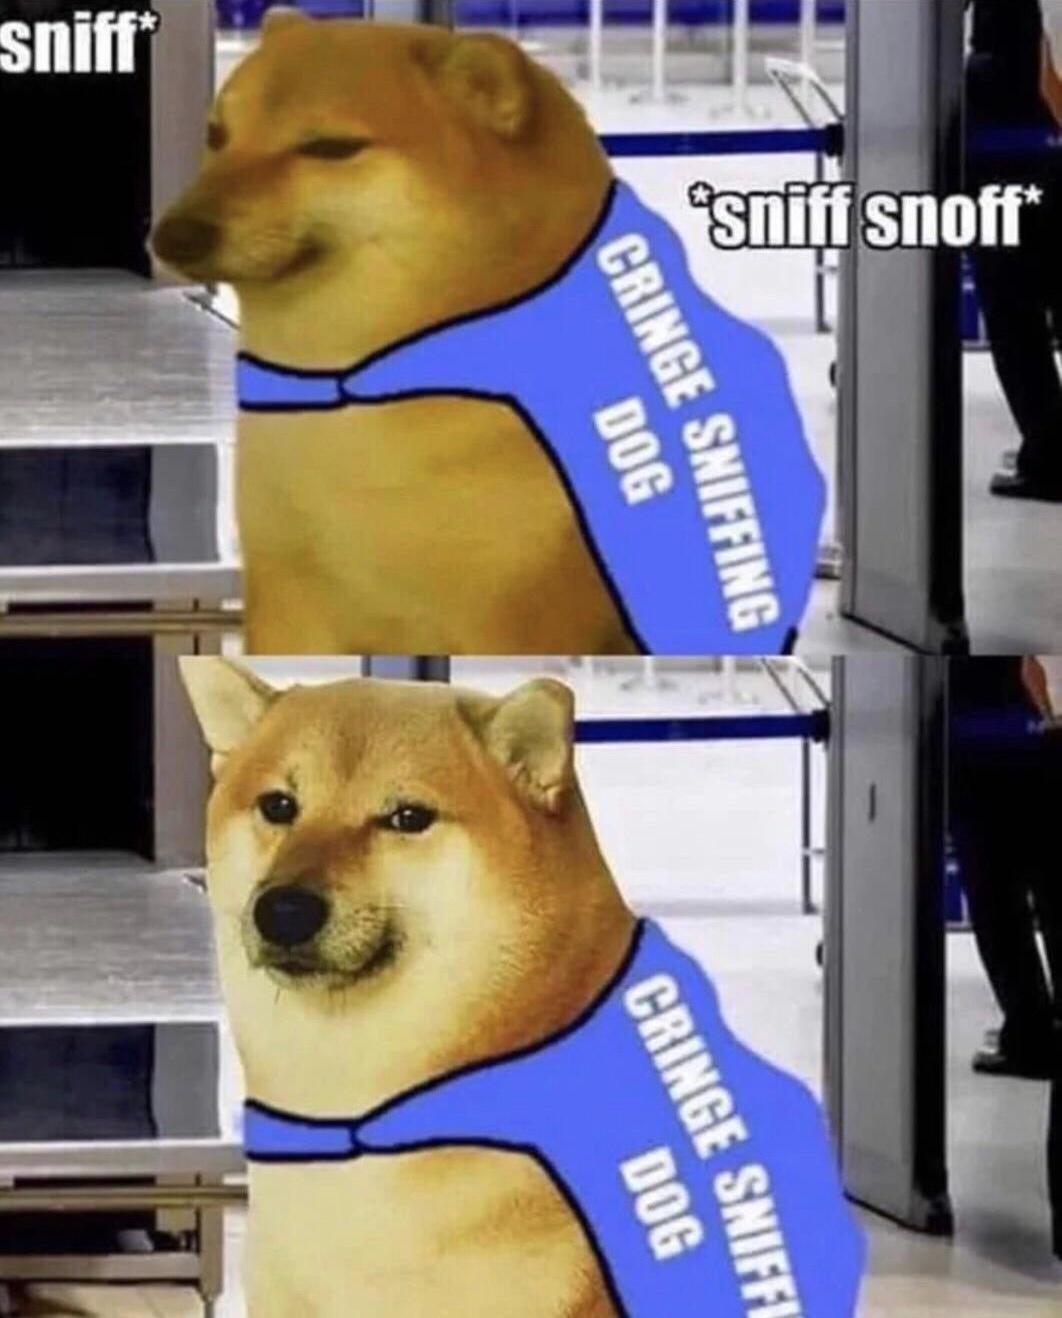 cringe meme - sniff snoff Cringe Sniffing Dog Cringe Sniffi Dog sniff